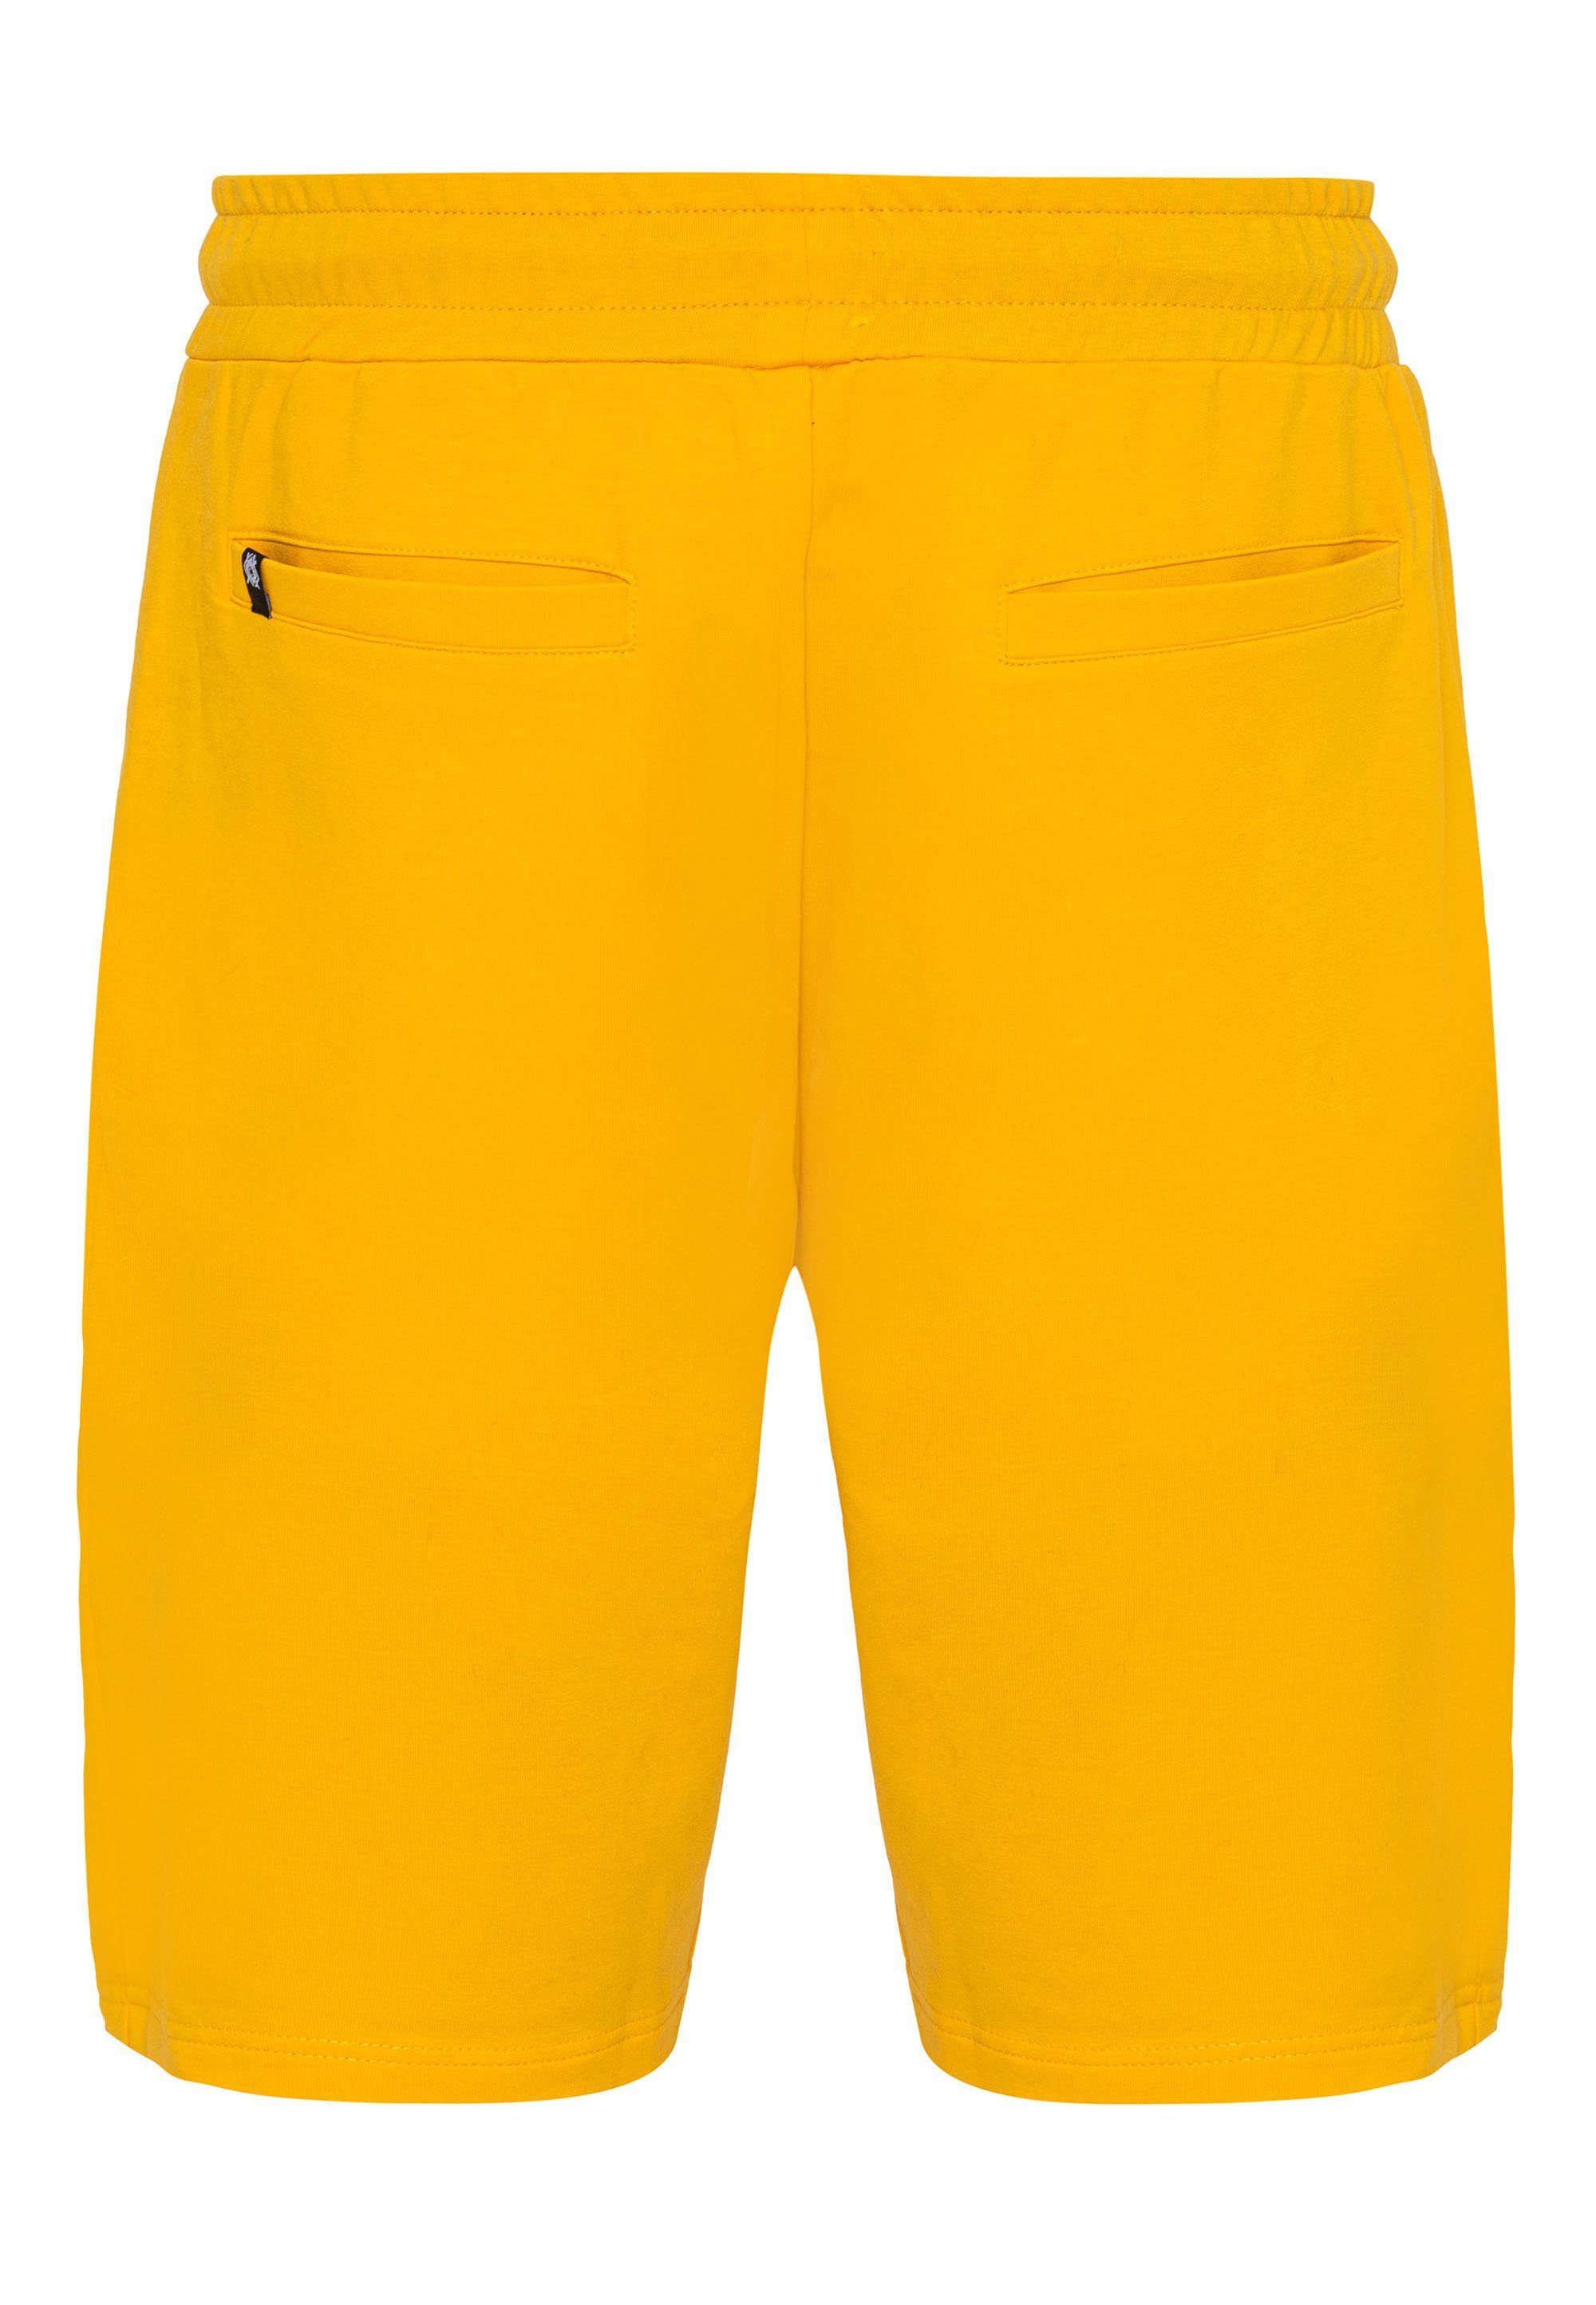 Shorts in sportlichem gelb Look Baxx & Cipo